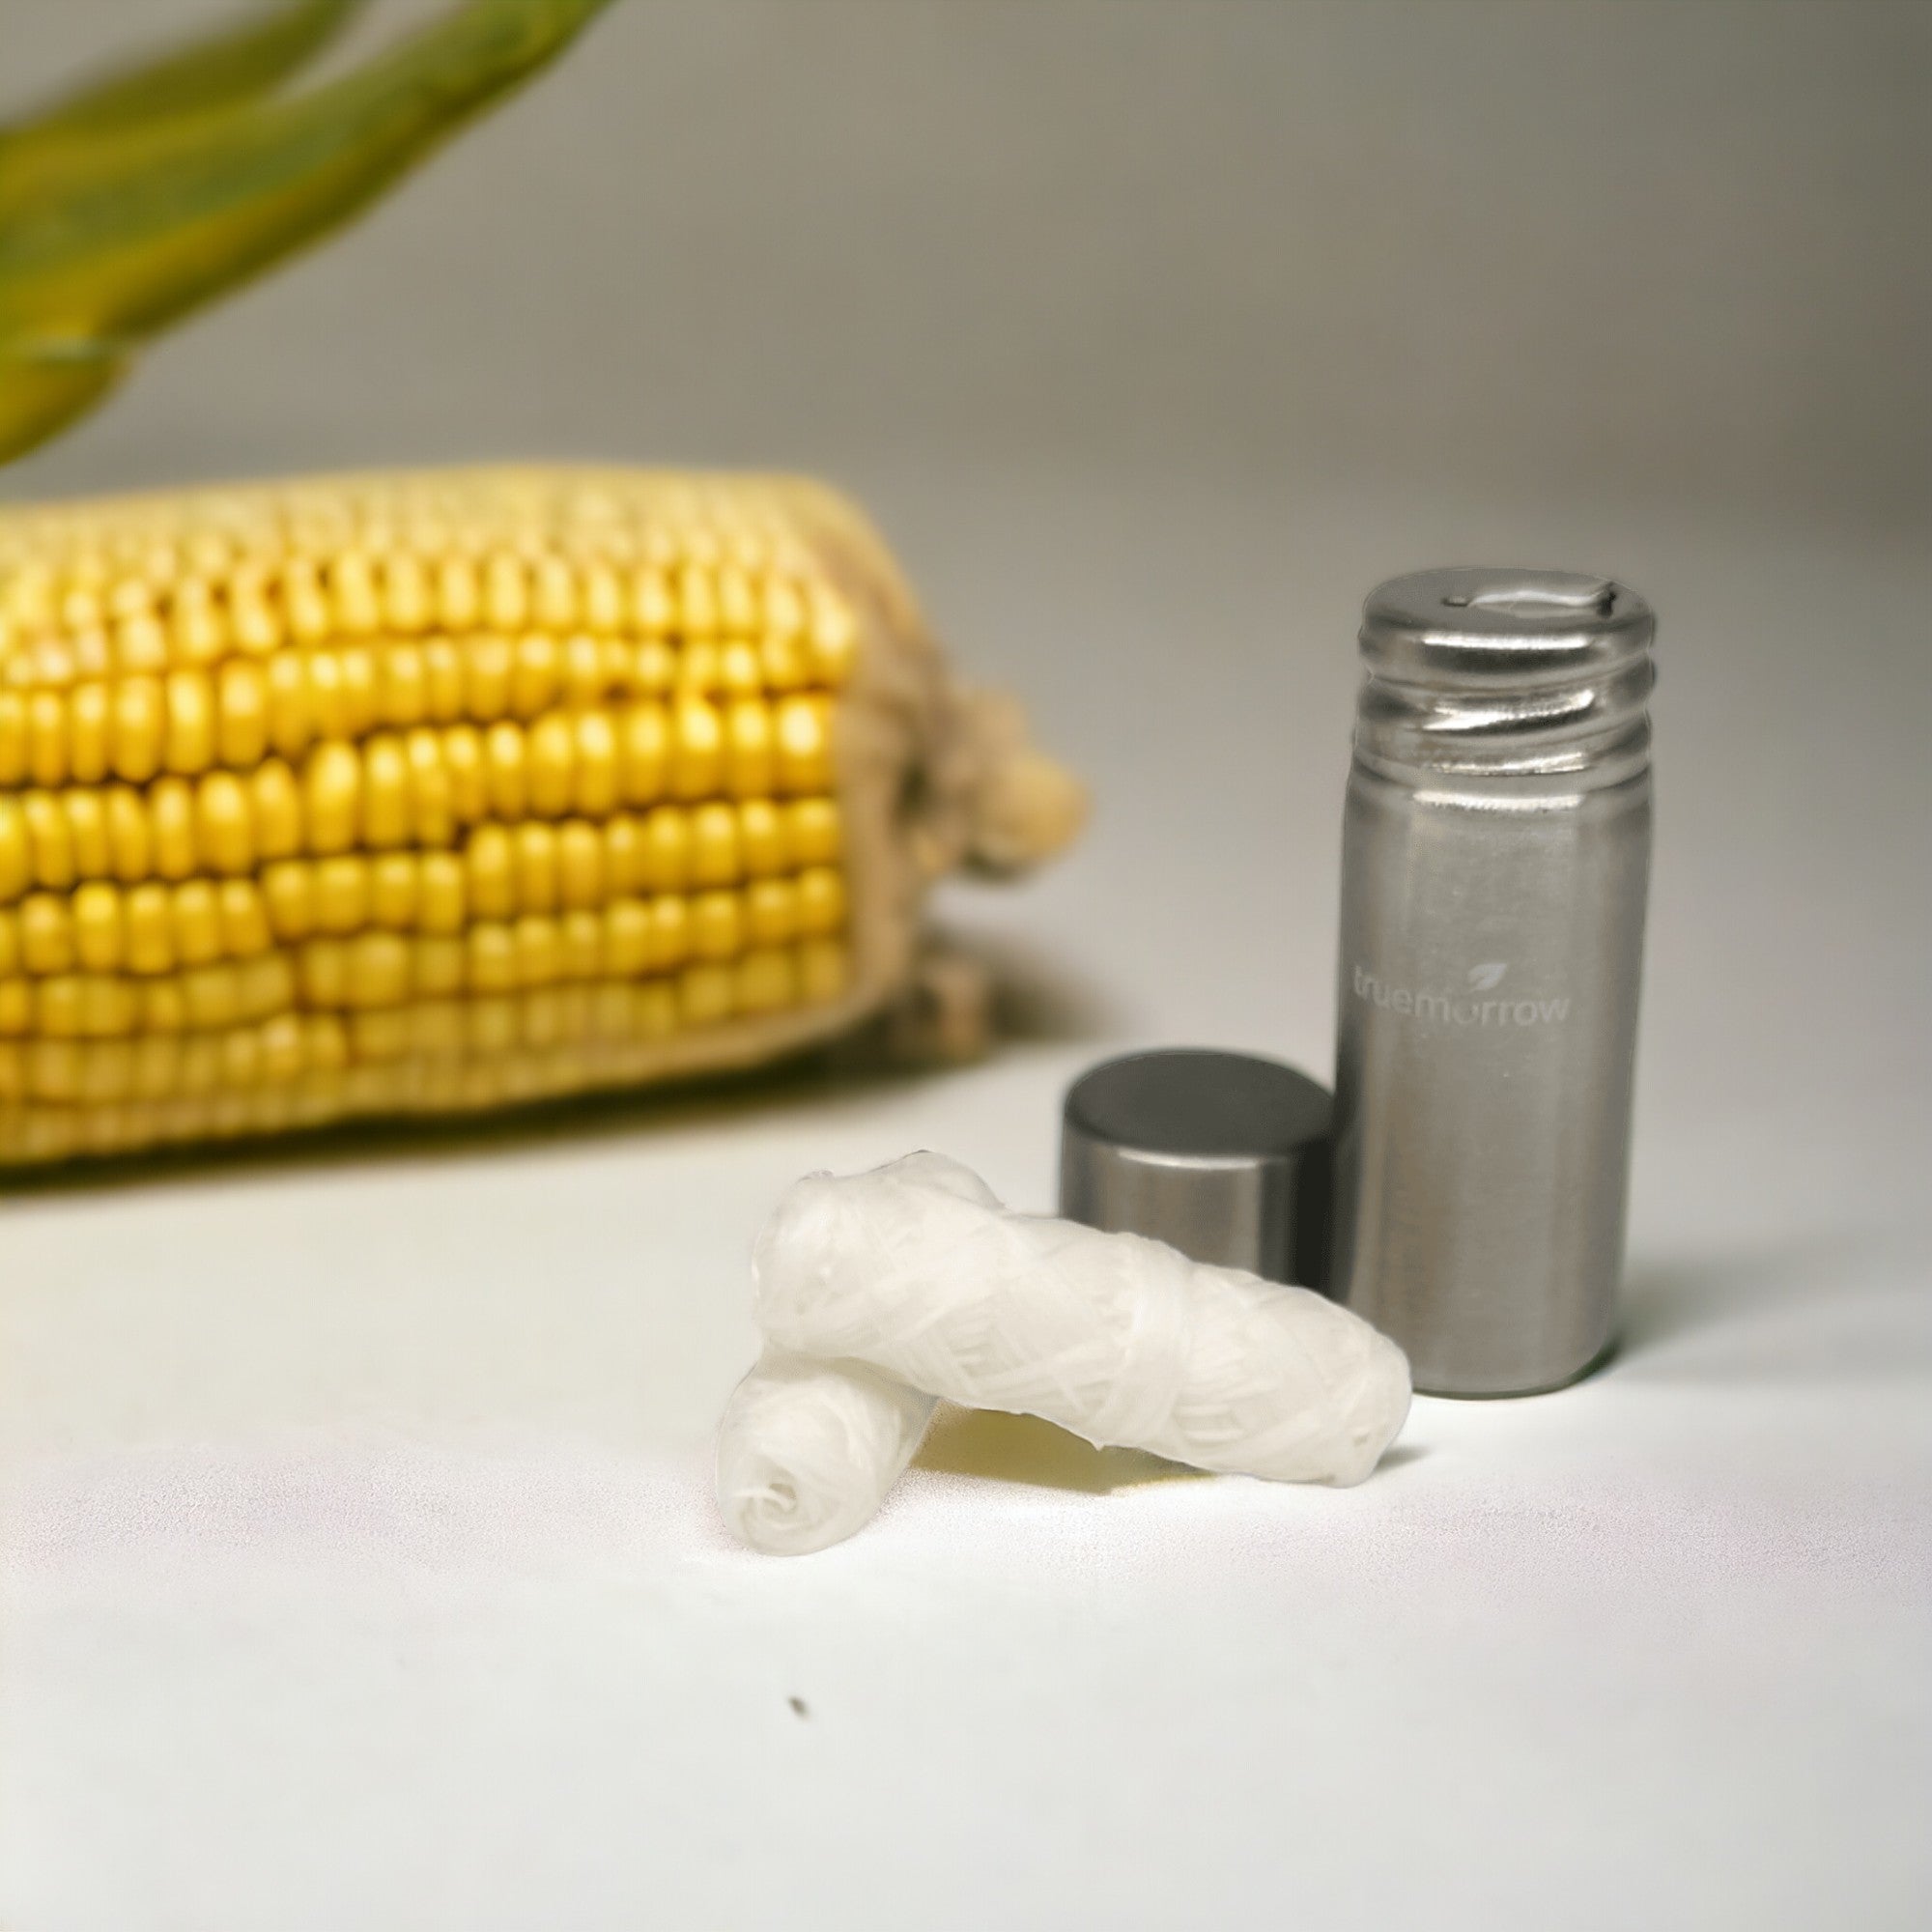 truemorrow vegane Zahnseide in Edelstahhl Flakon mit Maiskoben im Hintergrund